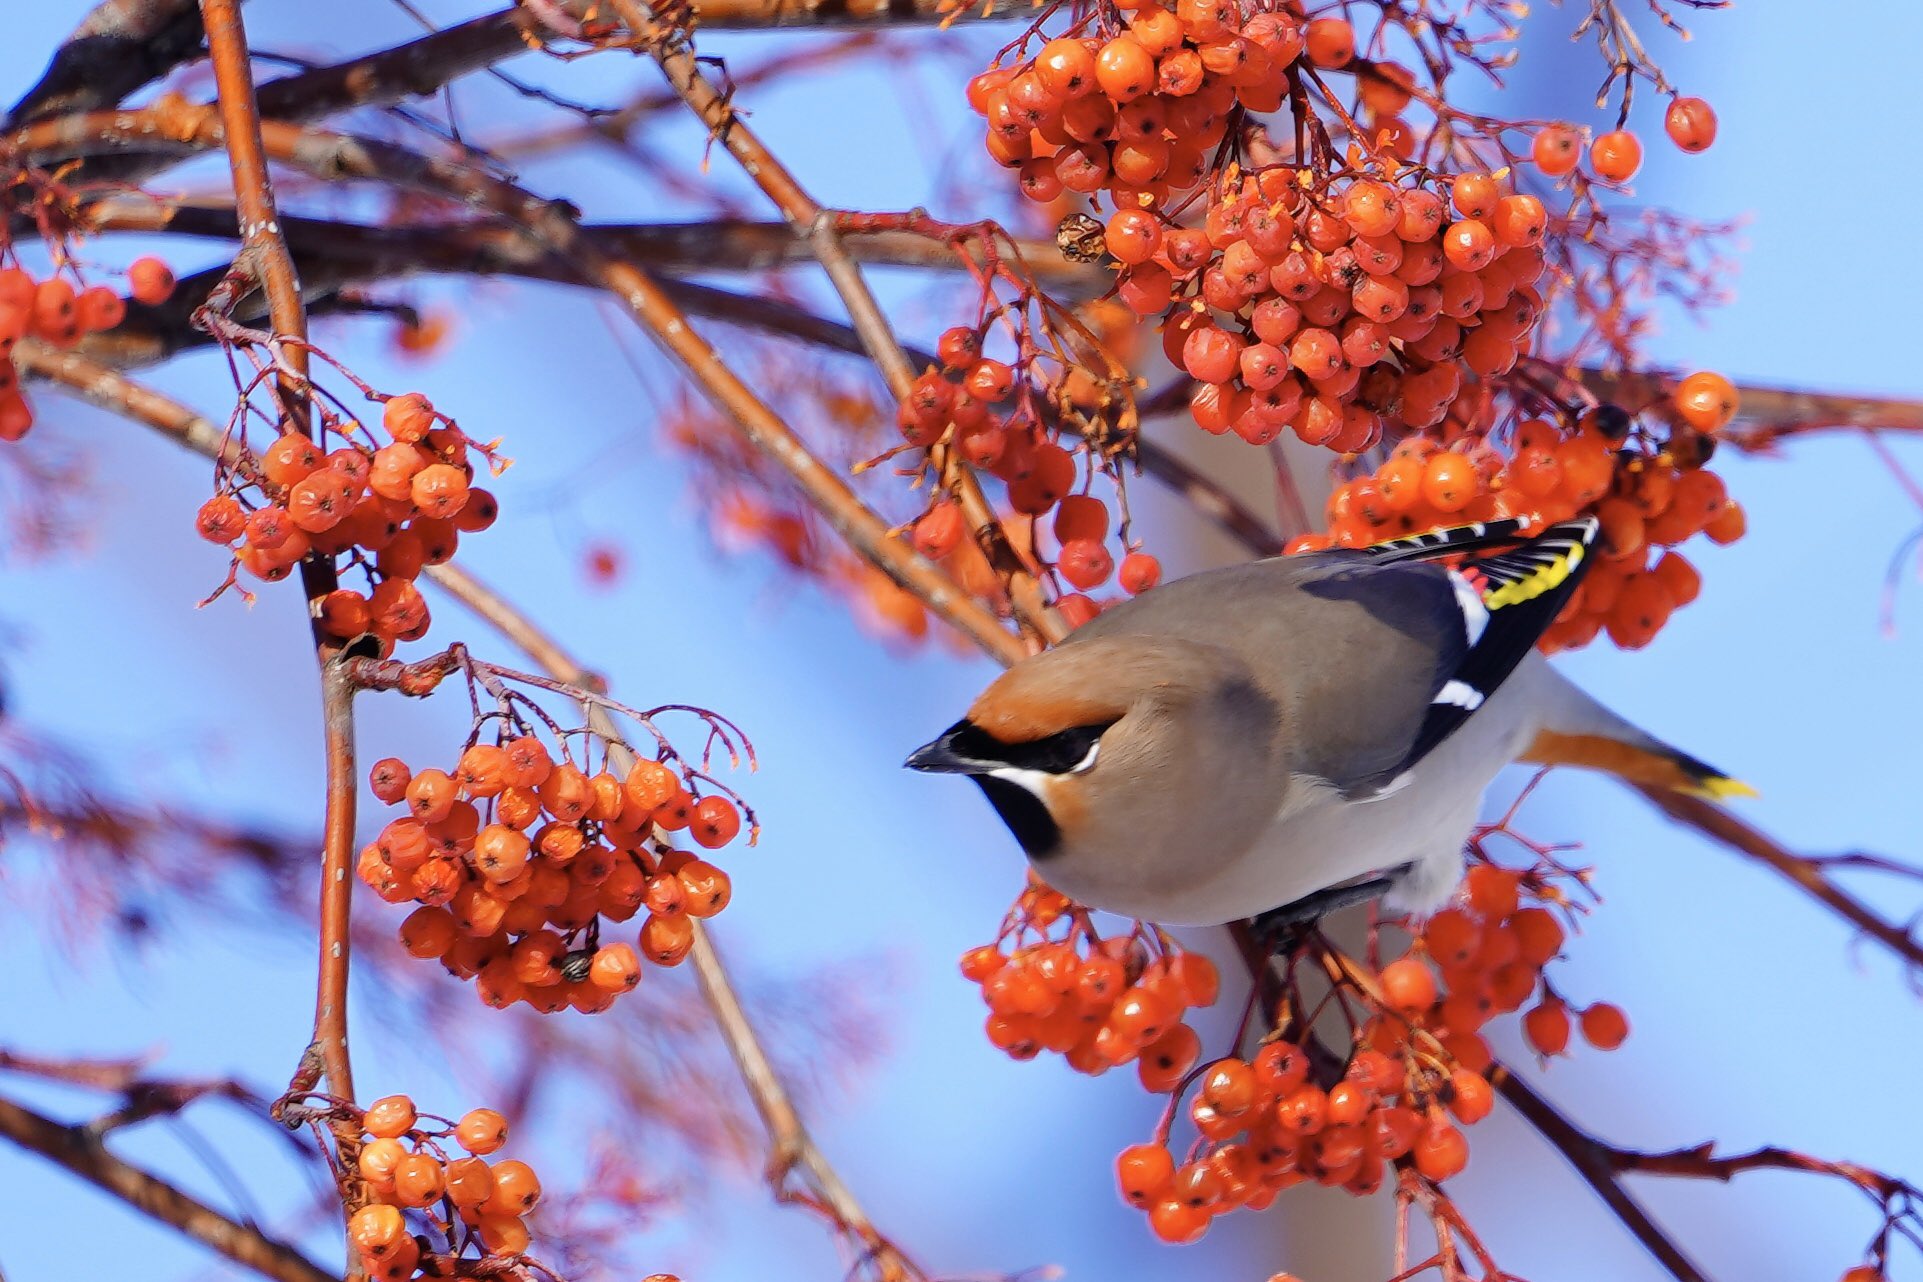 Ikuyo Wakayama 綺麗なキレンジャク 初めて見ました すごい群れでした Sony Bird Birdersgallery Sonyalpha 鳥 キレンジャク 東京カメラ部 北海道 T Co Dmrt3wbmjo Twitter